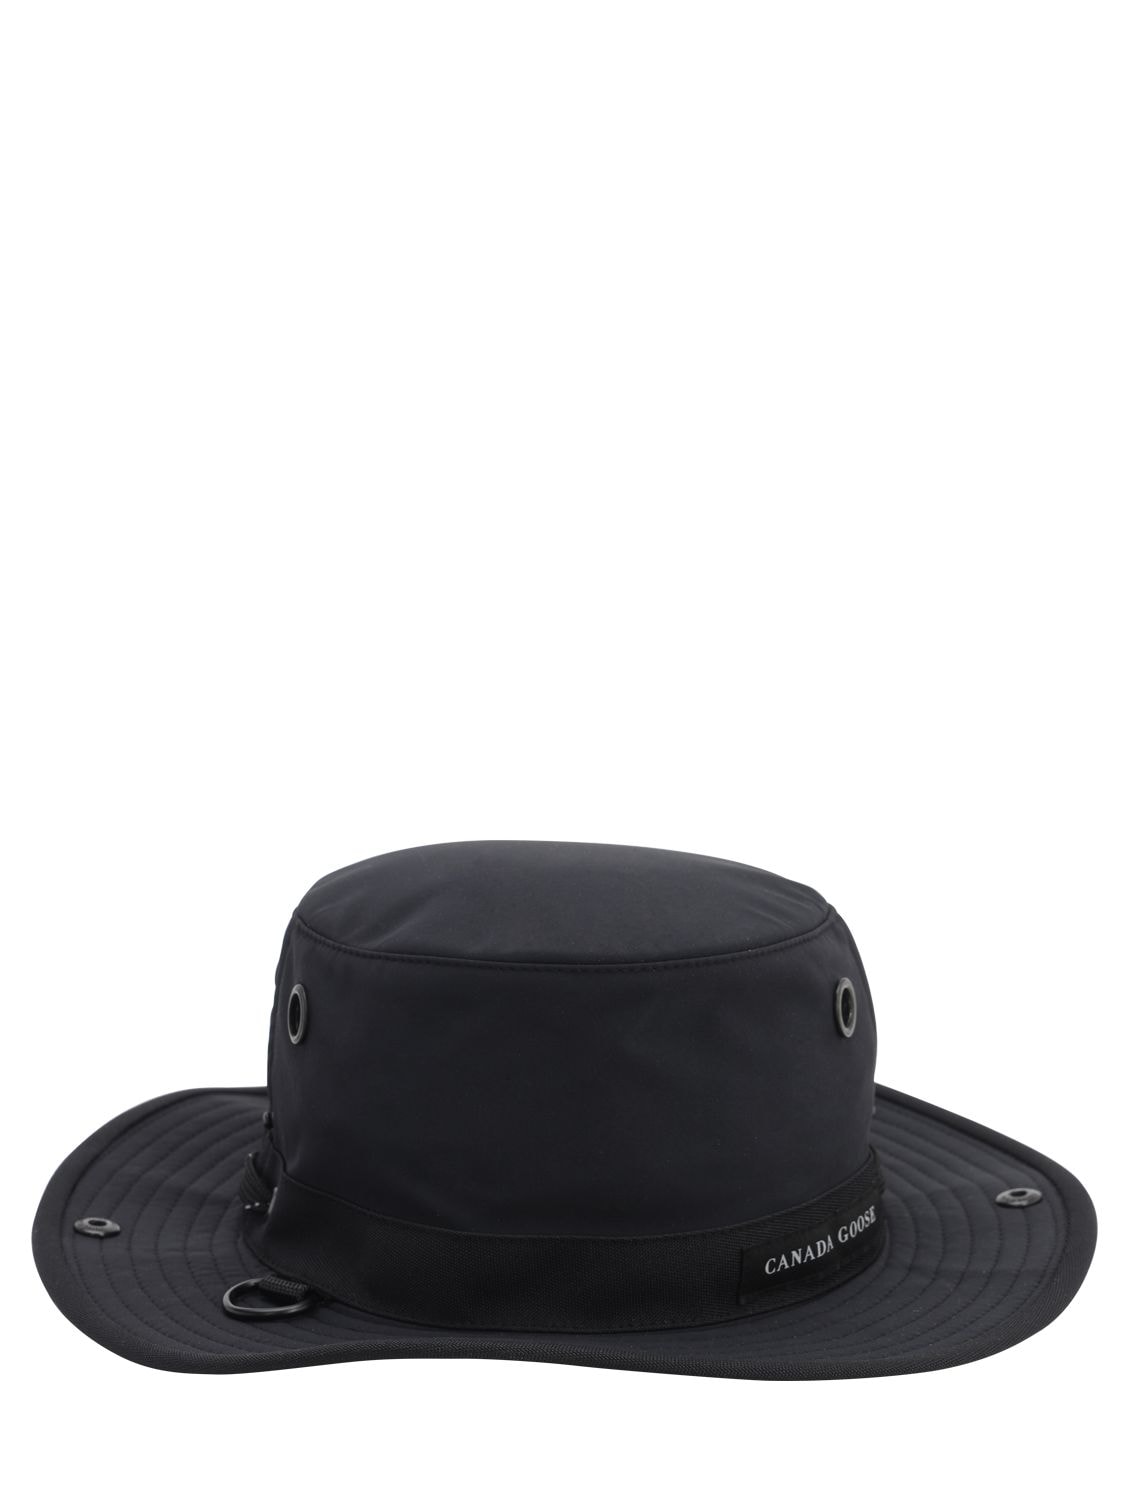 Canada Goose Journey Hat In Black